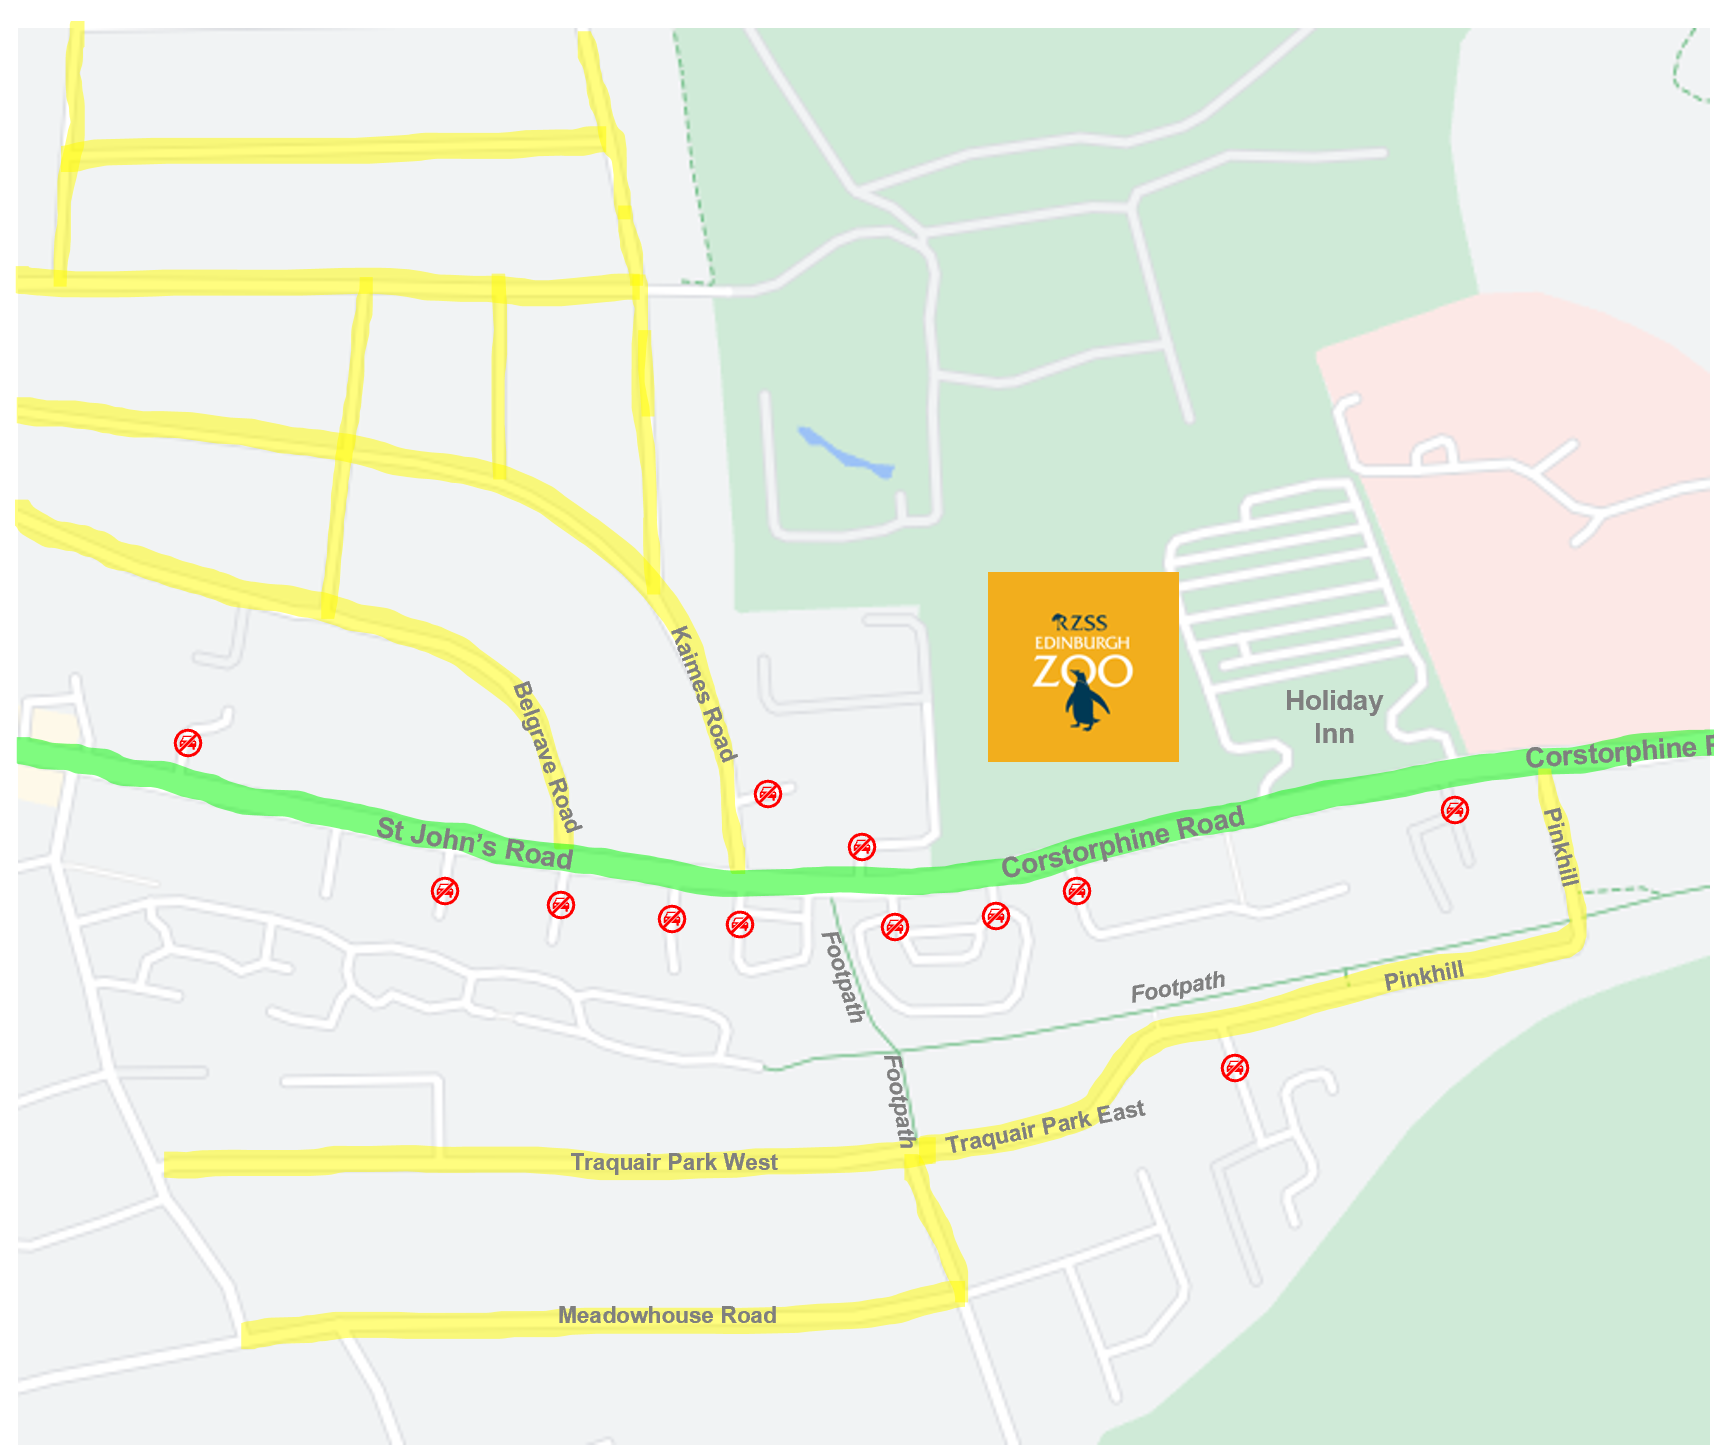 screenshot of google maps showing alternative parking around the zoo